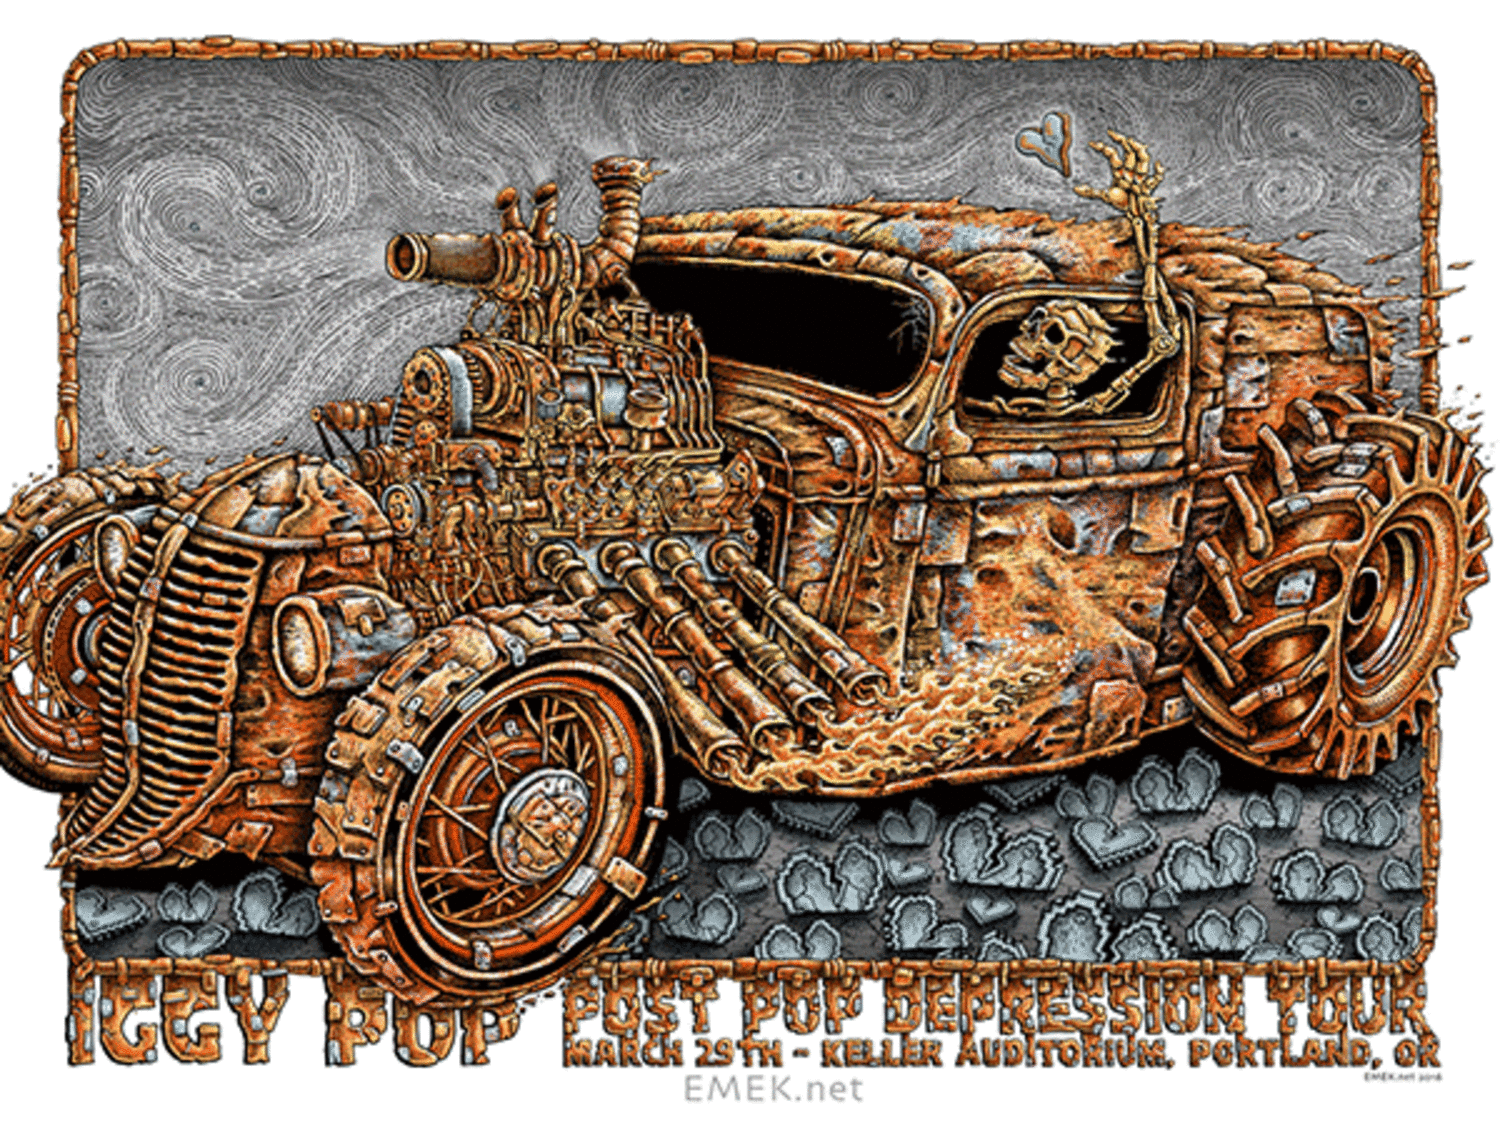 EMEK - 2016 "Rust Rocket" Iggy Pop Farewell Tour - "Post POP Depression" w/ Josh Homme from QOTSA - at the Keller Auditorium in Portland - Limited Edition Concert Poster